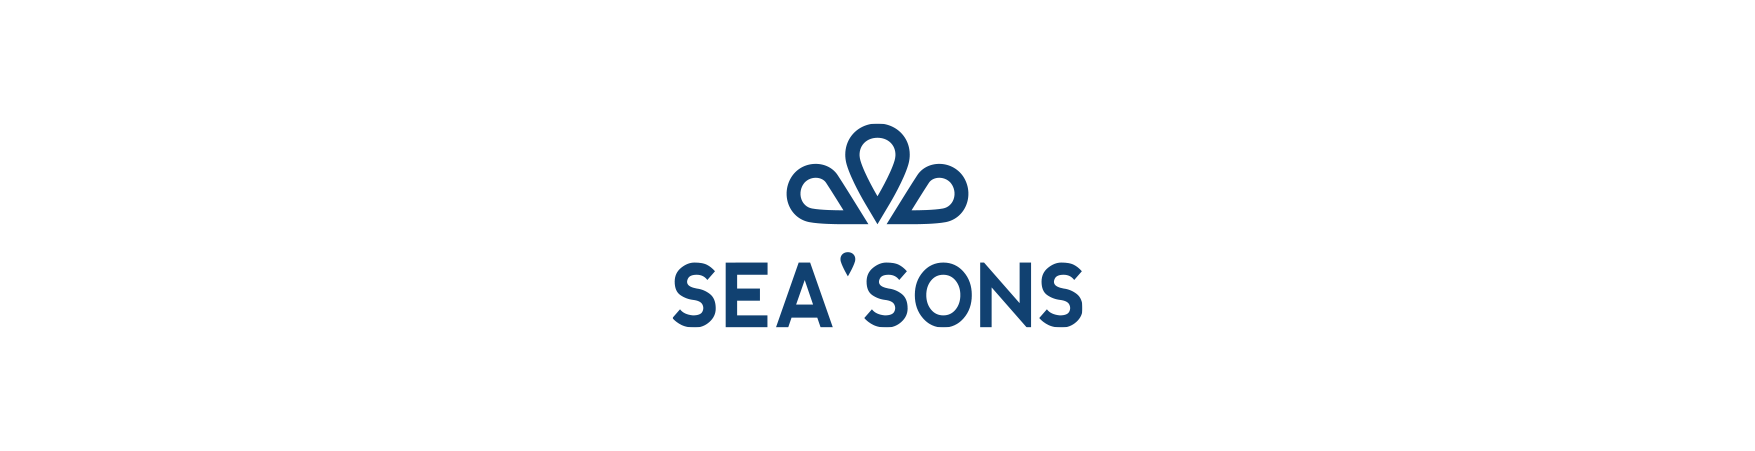 Sea'sons